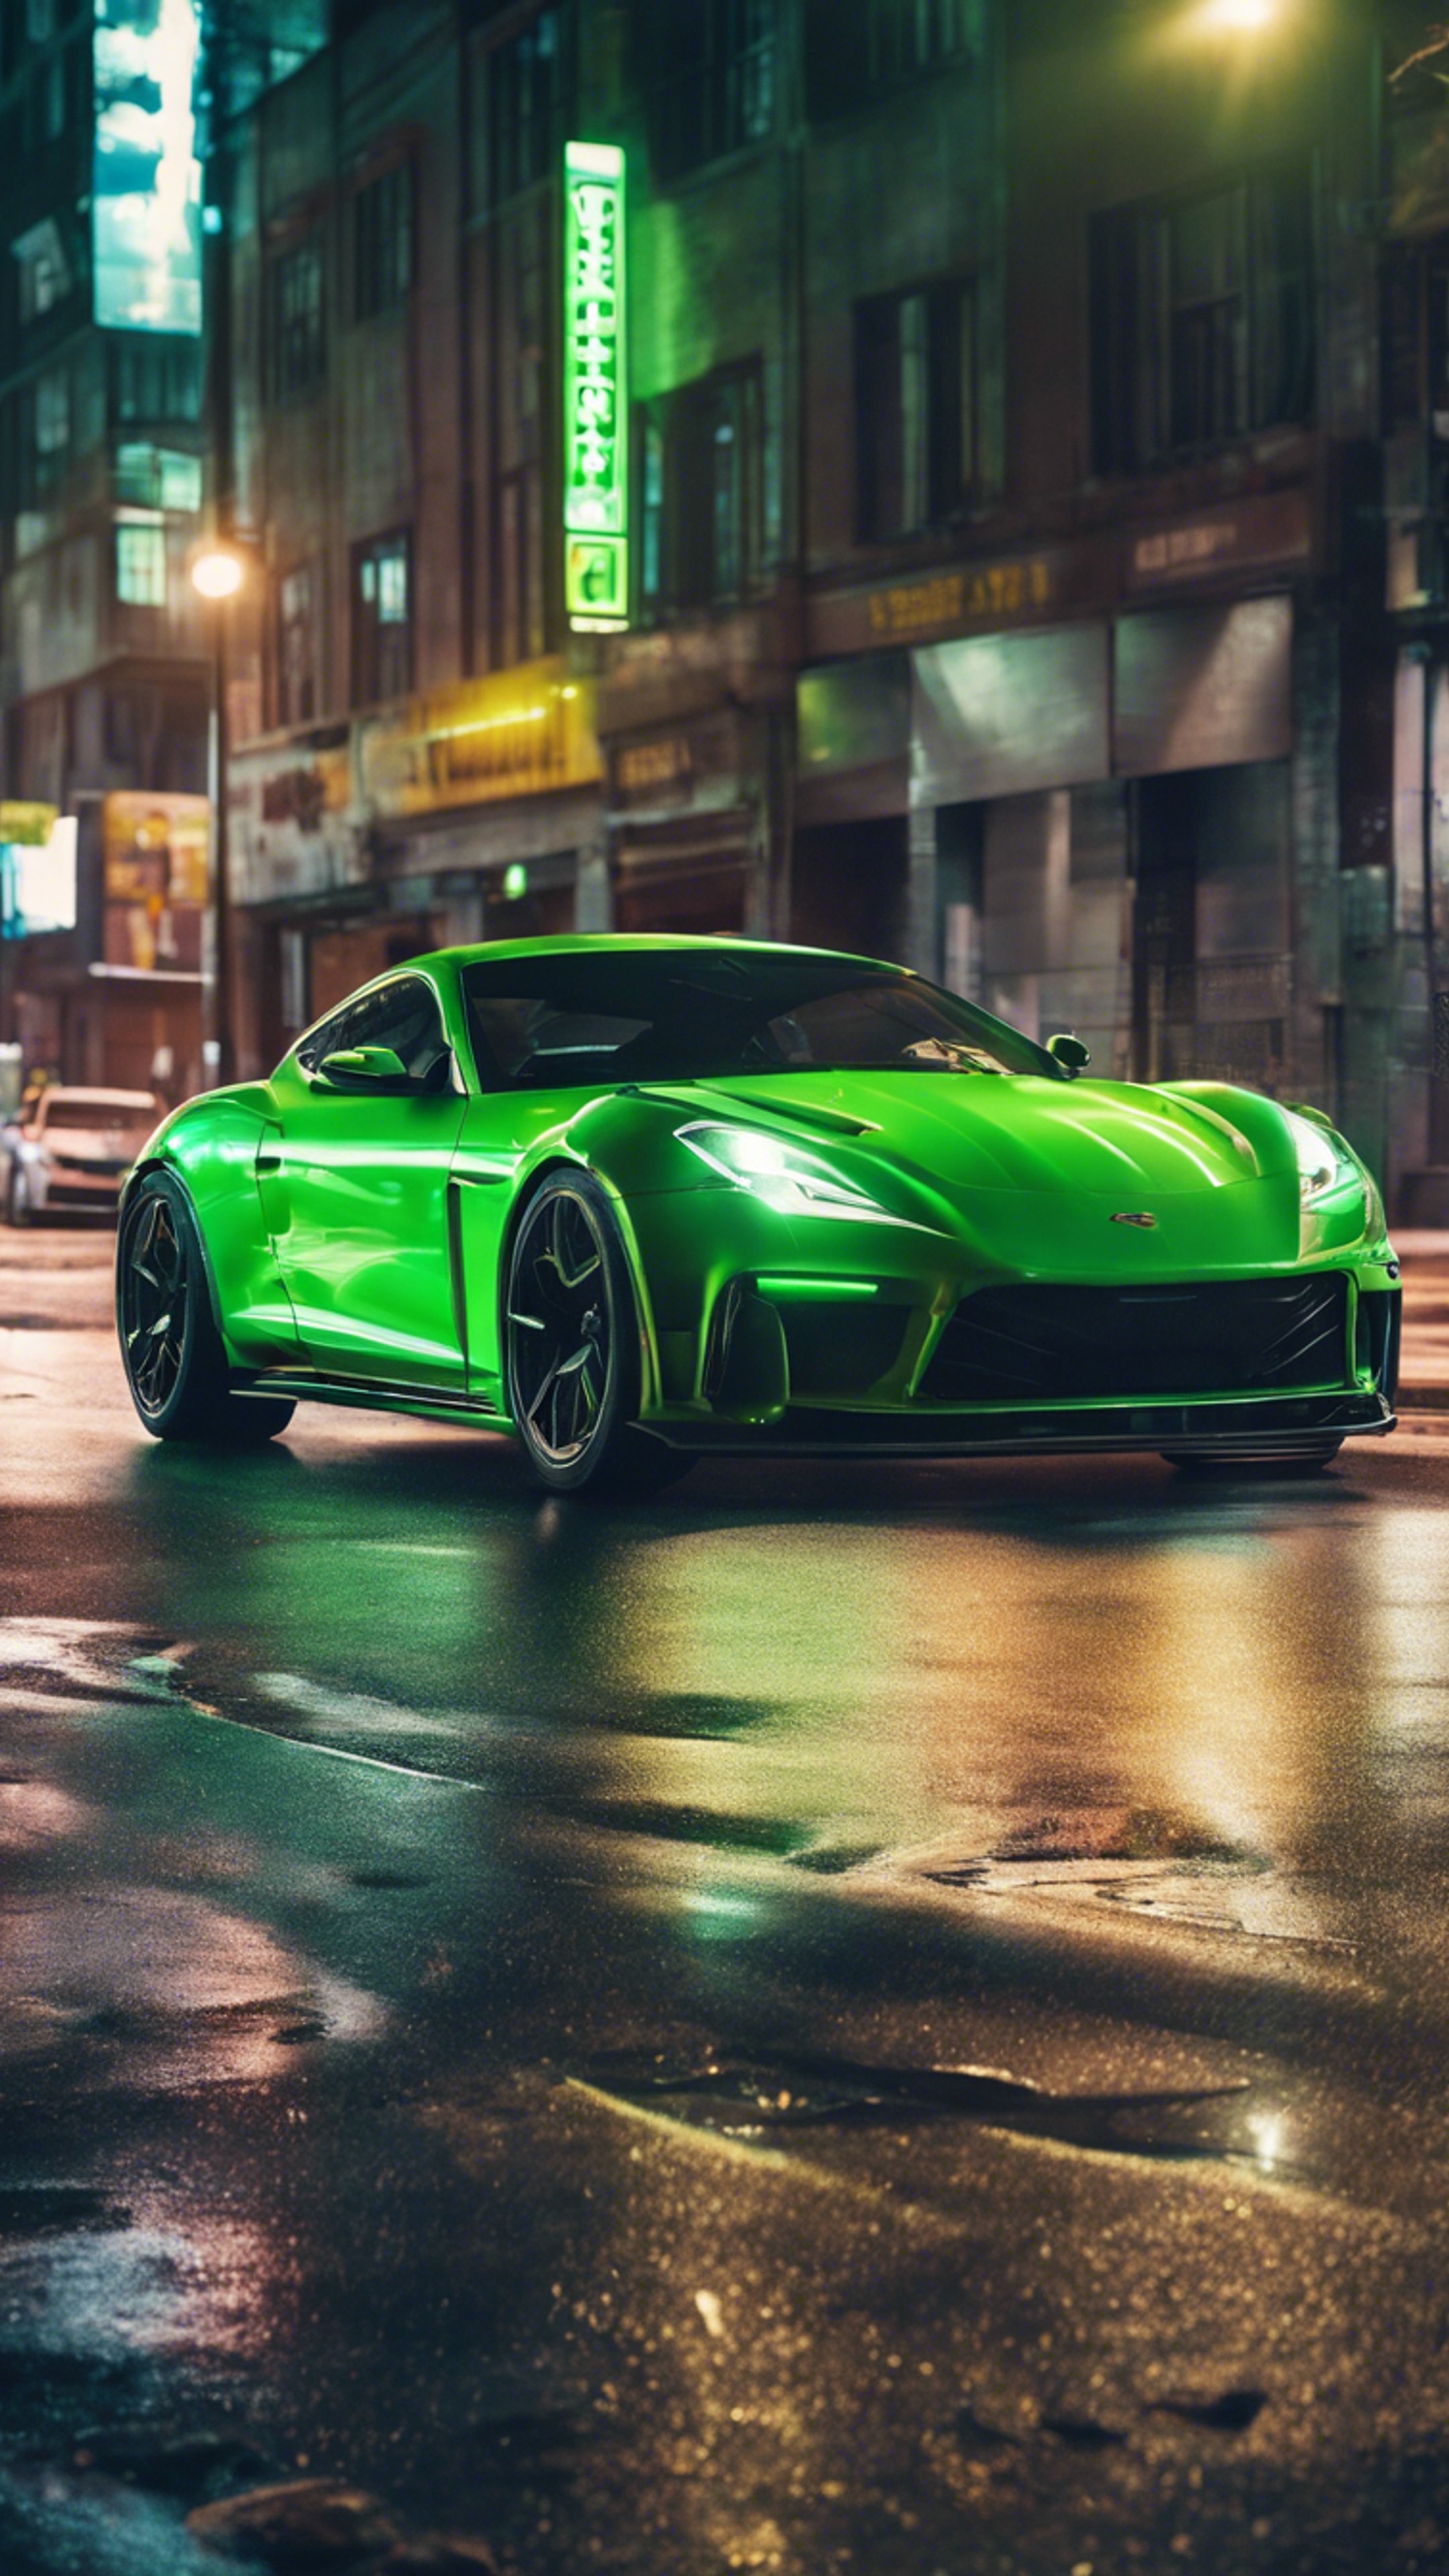 A cool neon green sports car racing down a city street at night. 벽지[ff2aa681813144c0b5f6]